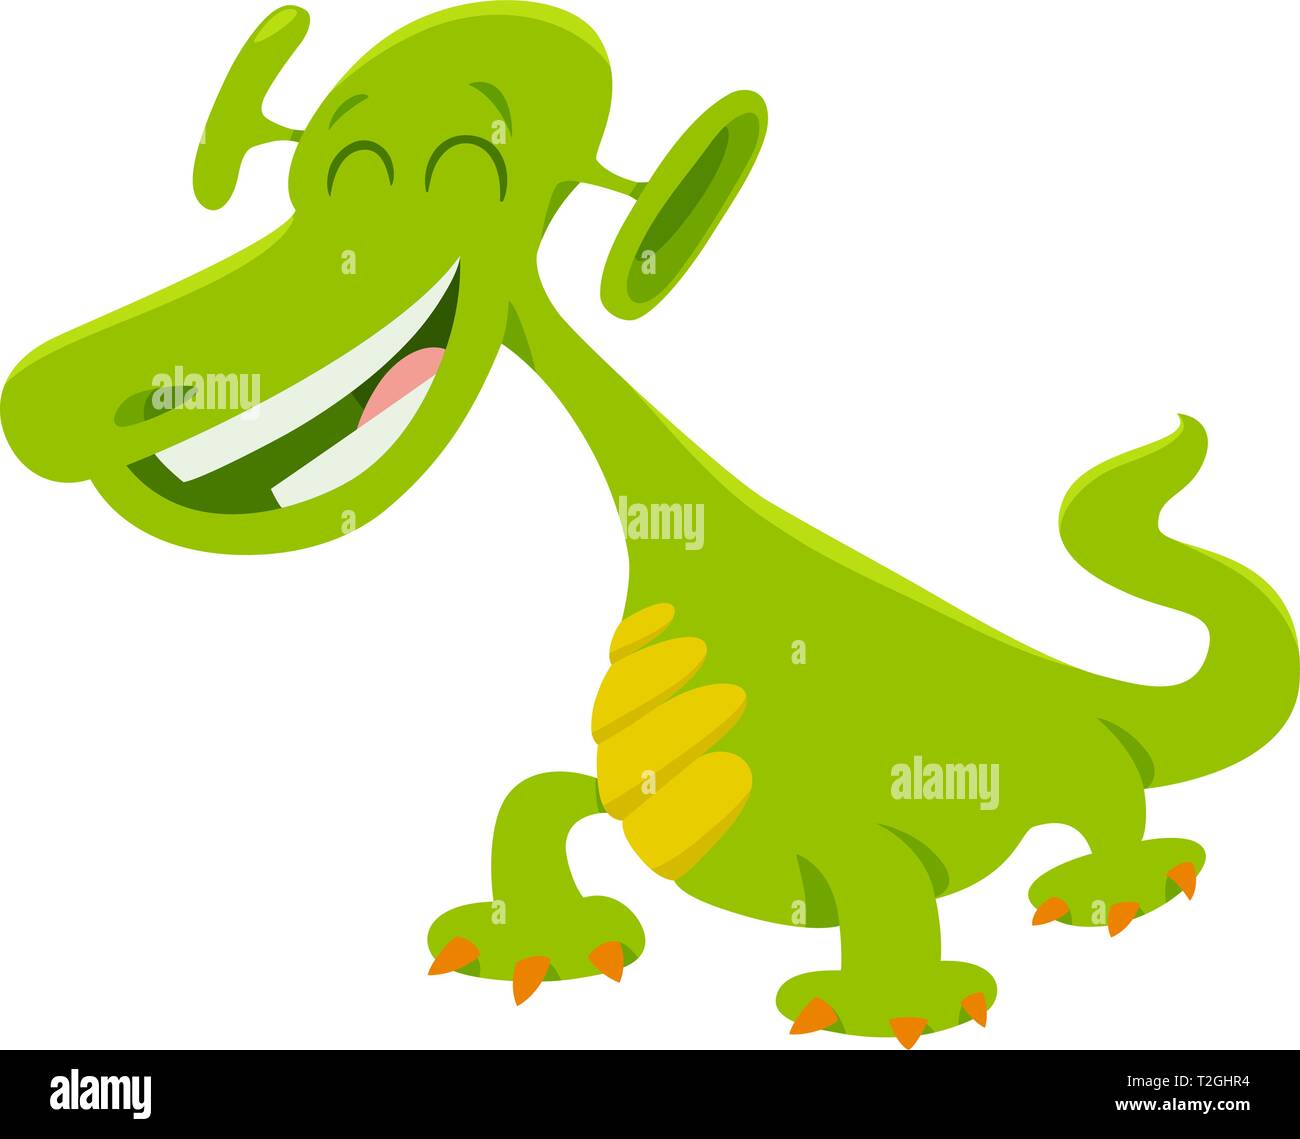 Cartoon Illustration of Cute Green Dragon or Monster Fantasy Animal Character Stock Vector